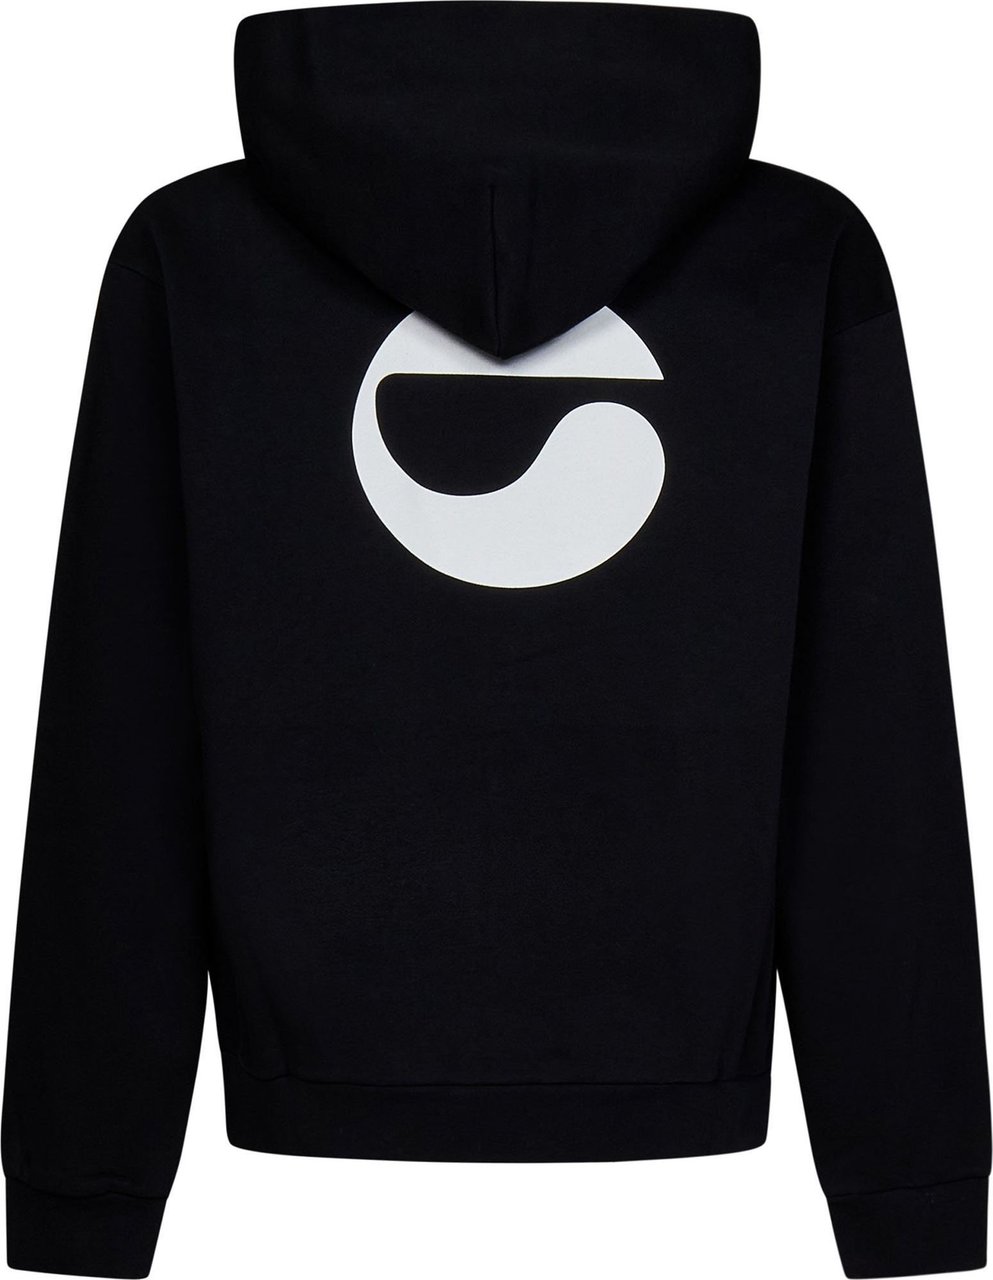 Coperni Coperni Sweaters Black Zwart